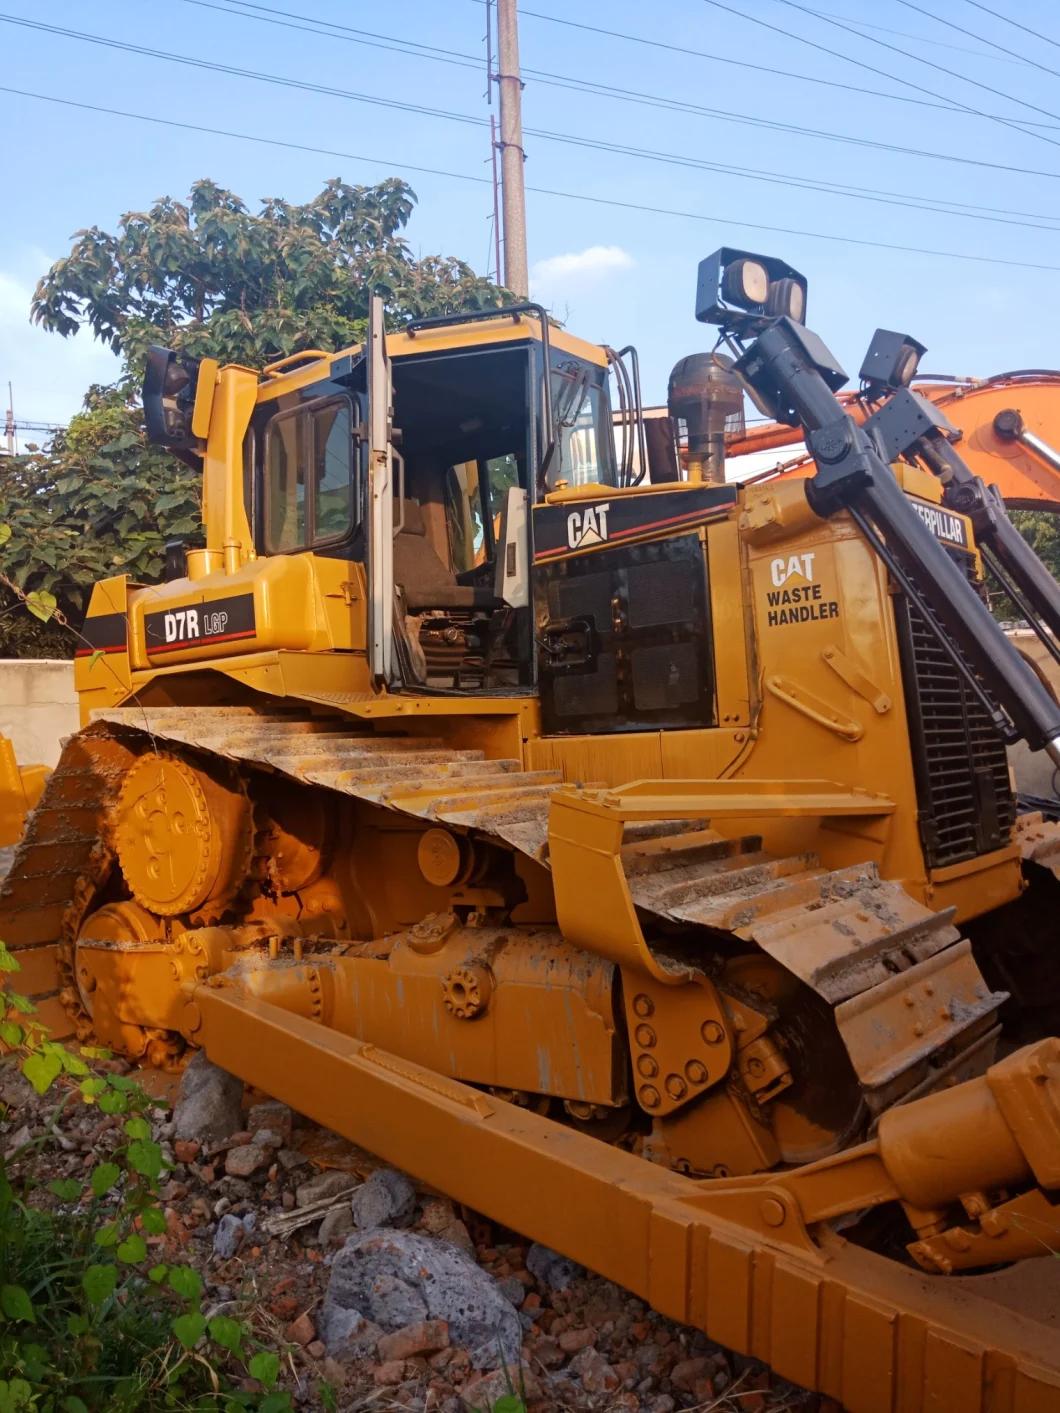 Cat D7r Bulldozer Excavator Bulldozer Used/Second Hand/Cheap/80%New/ USA/Good Quality/Cat D7r